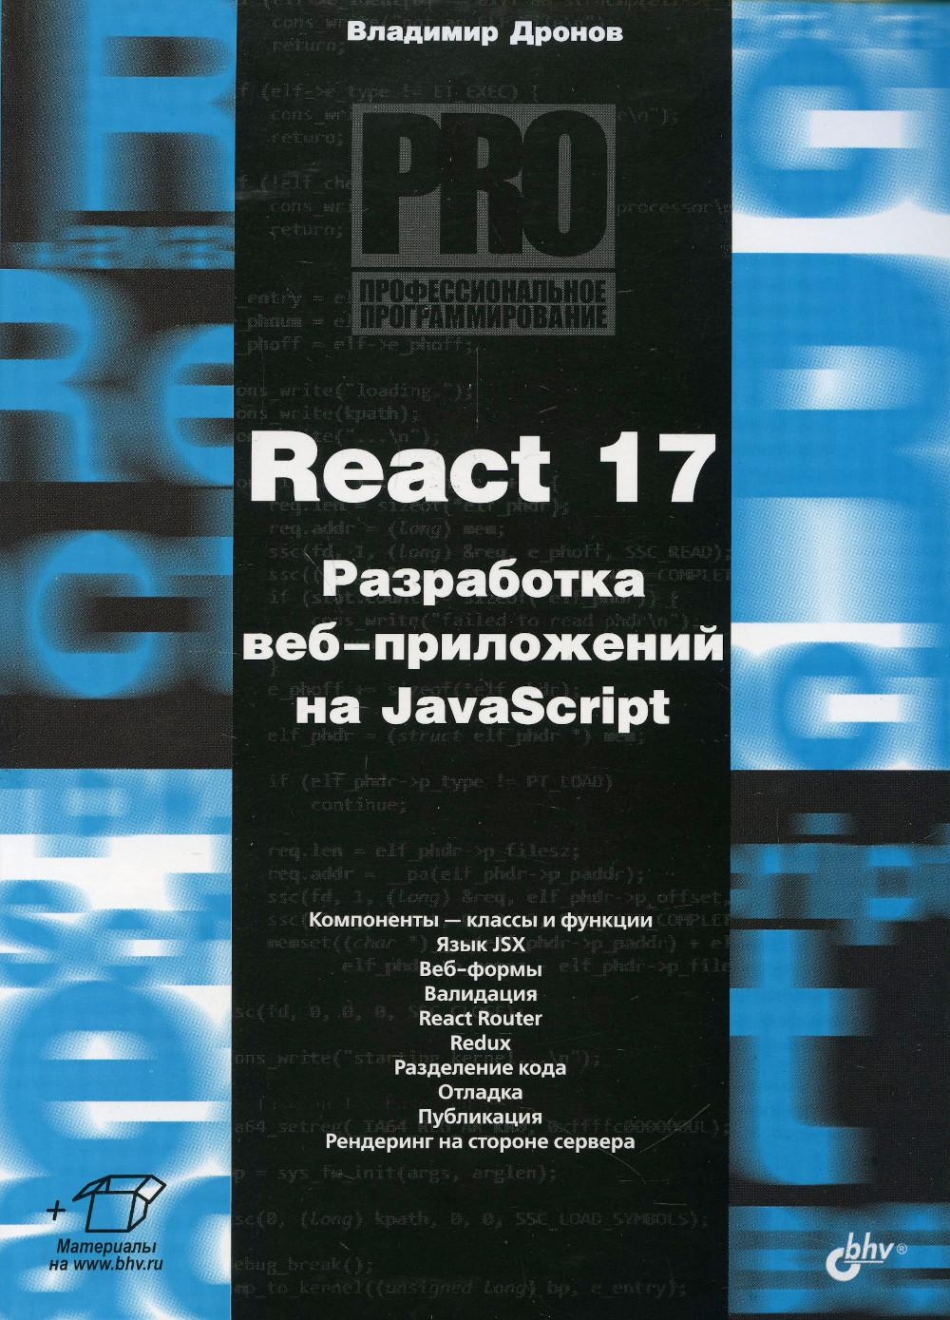 Дронов В.А. React 17. Разработка веб-приложений на JavaScript 